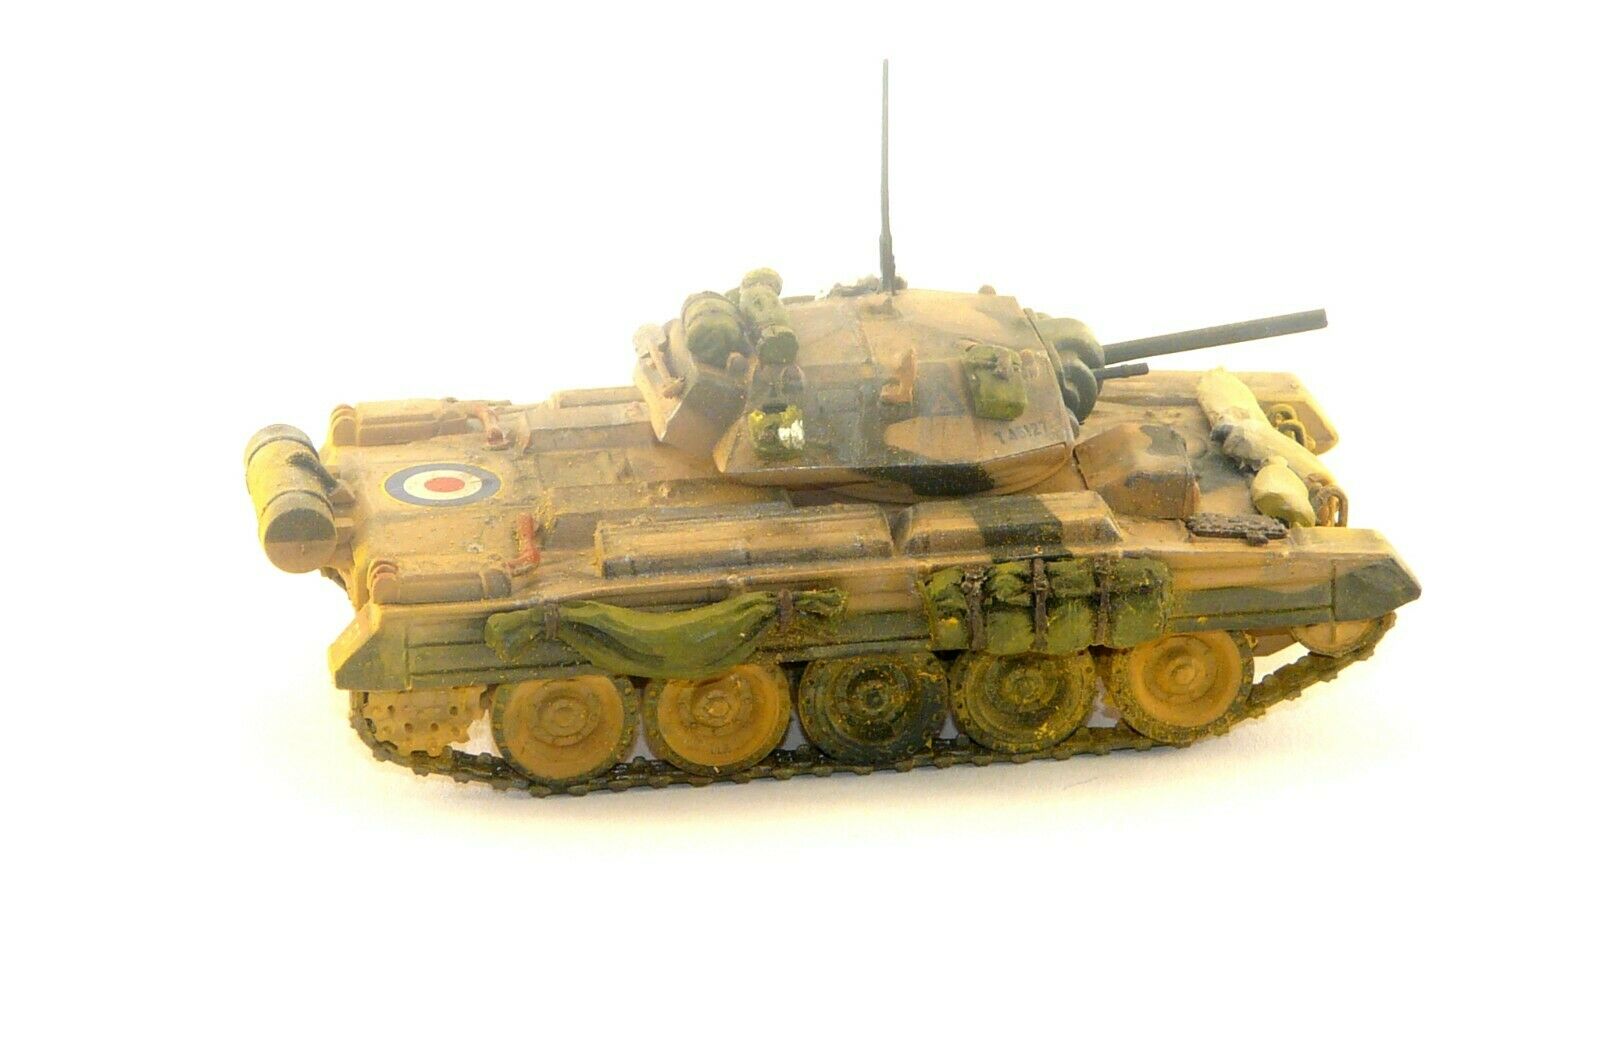 Redog 1:72/76 Crusader Tank Military Scale Modelling Stowage Diorama Accessorises - redoguk